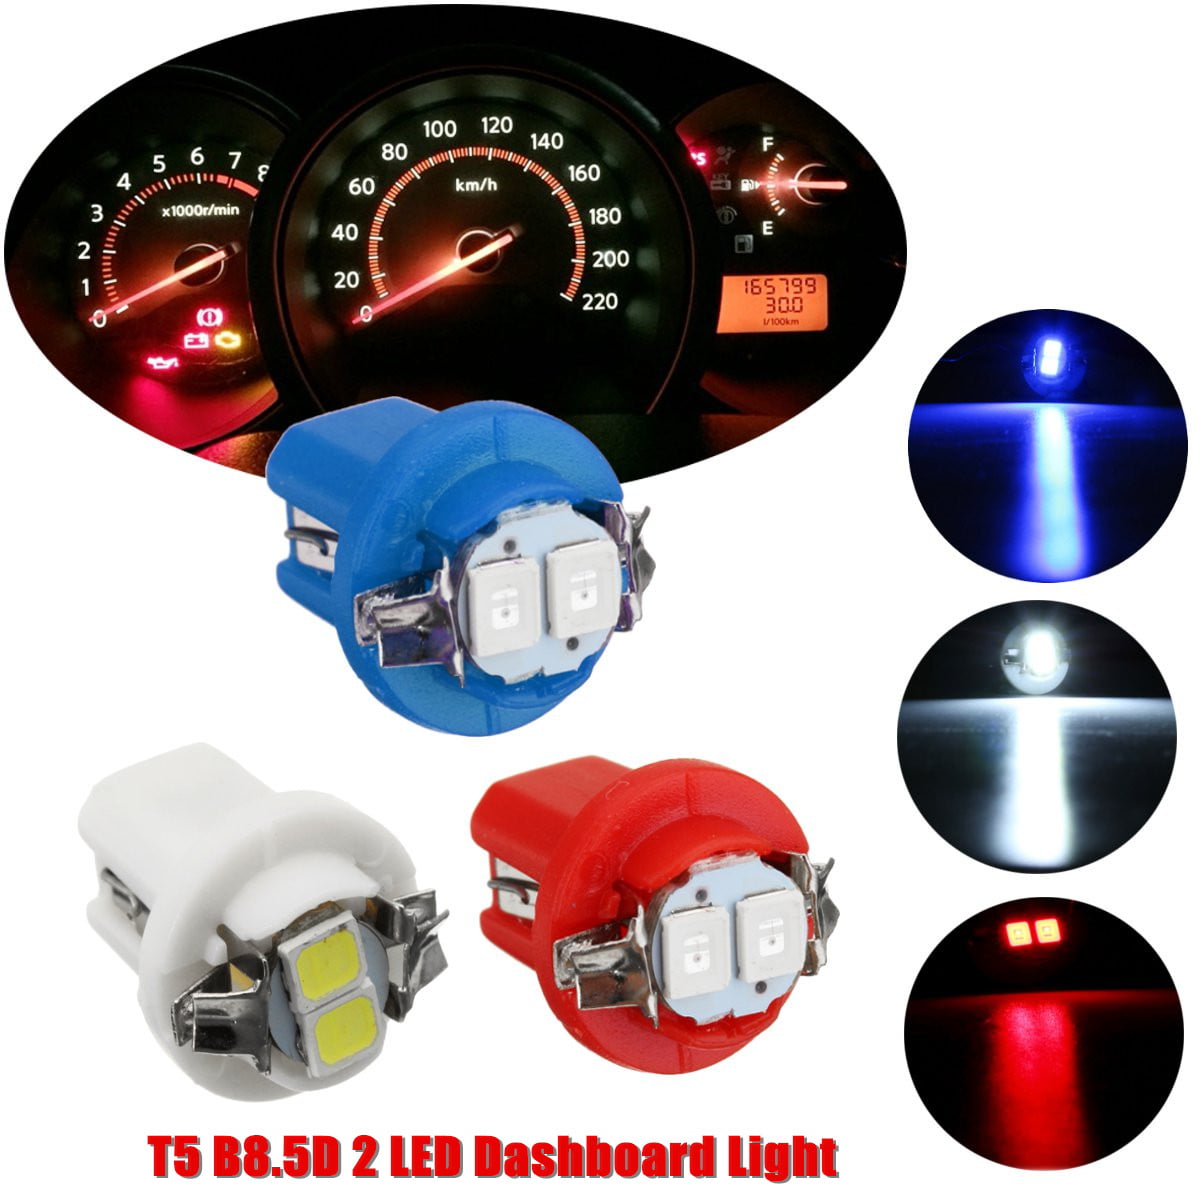 10x T5 B8.5D 5050 SMD LED Tube Auto Car Instrument Dashboard Light Bulbs White